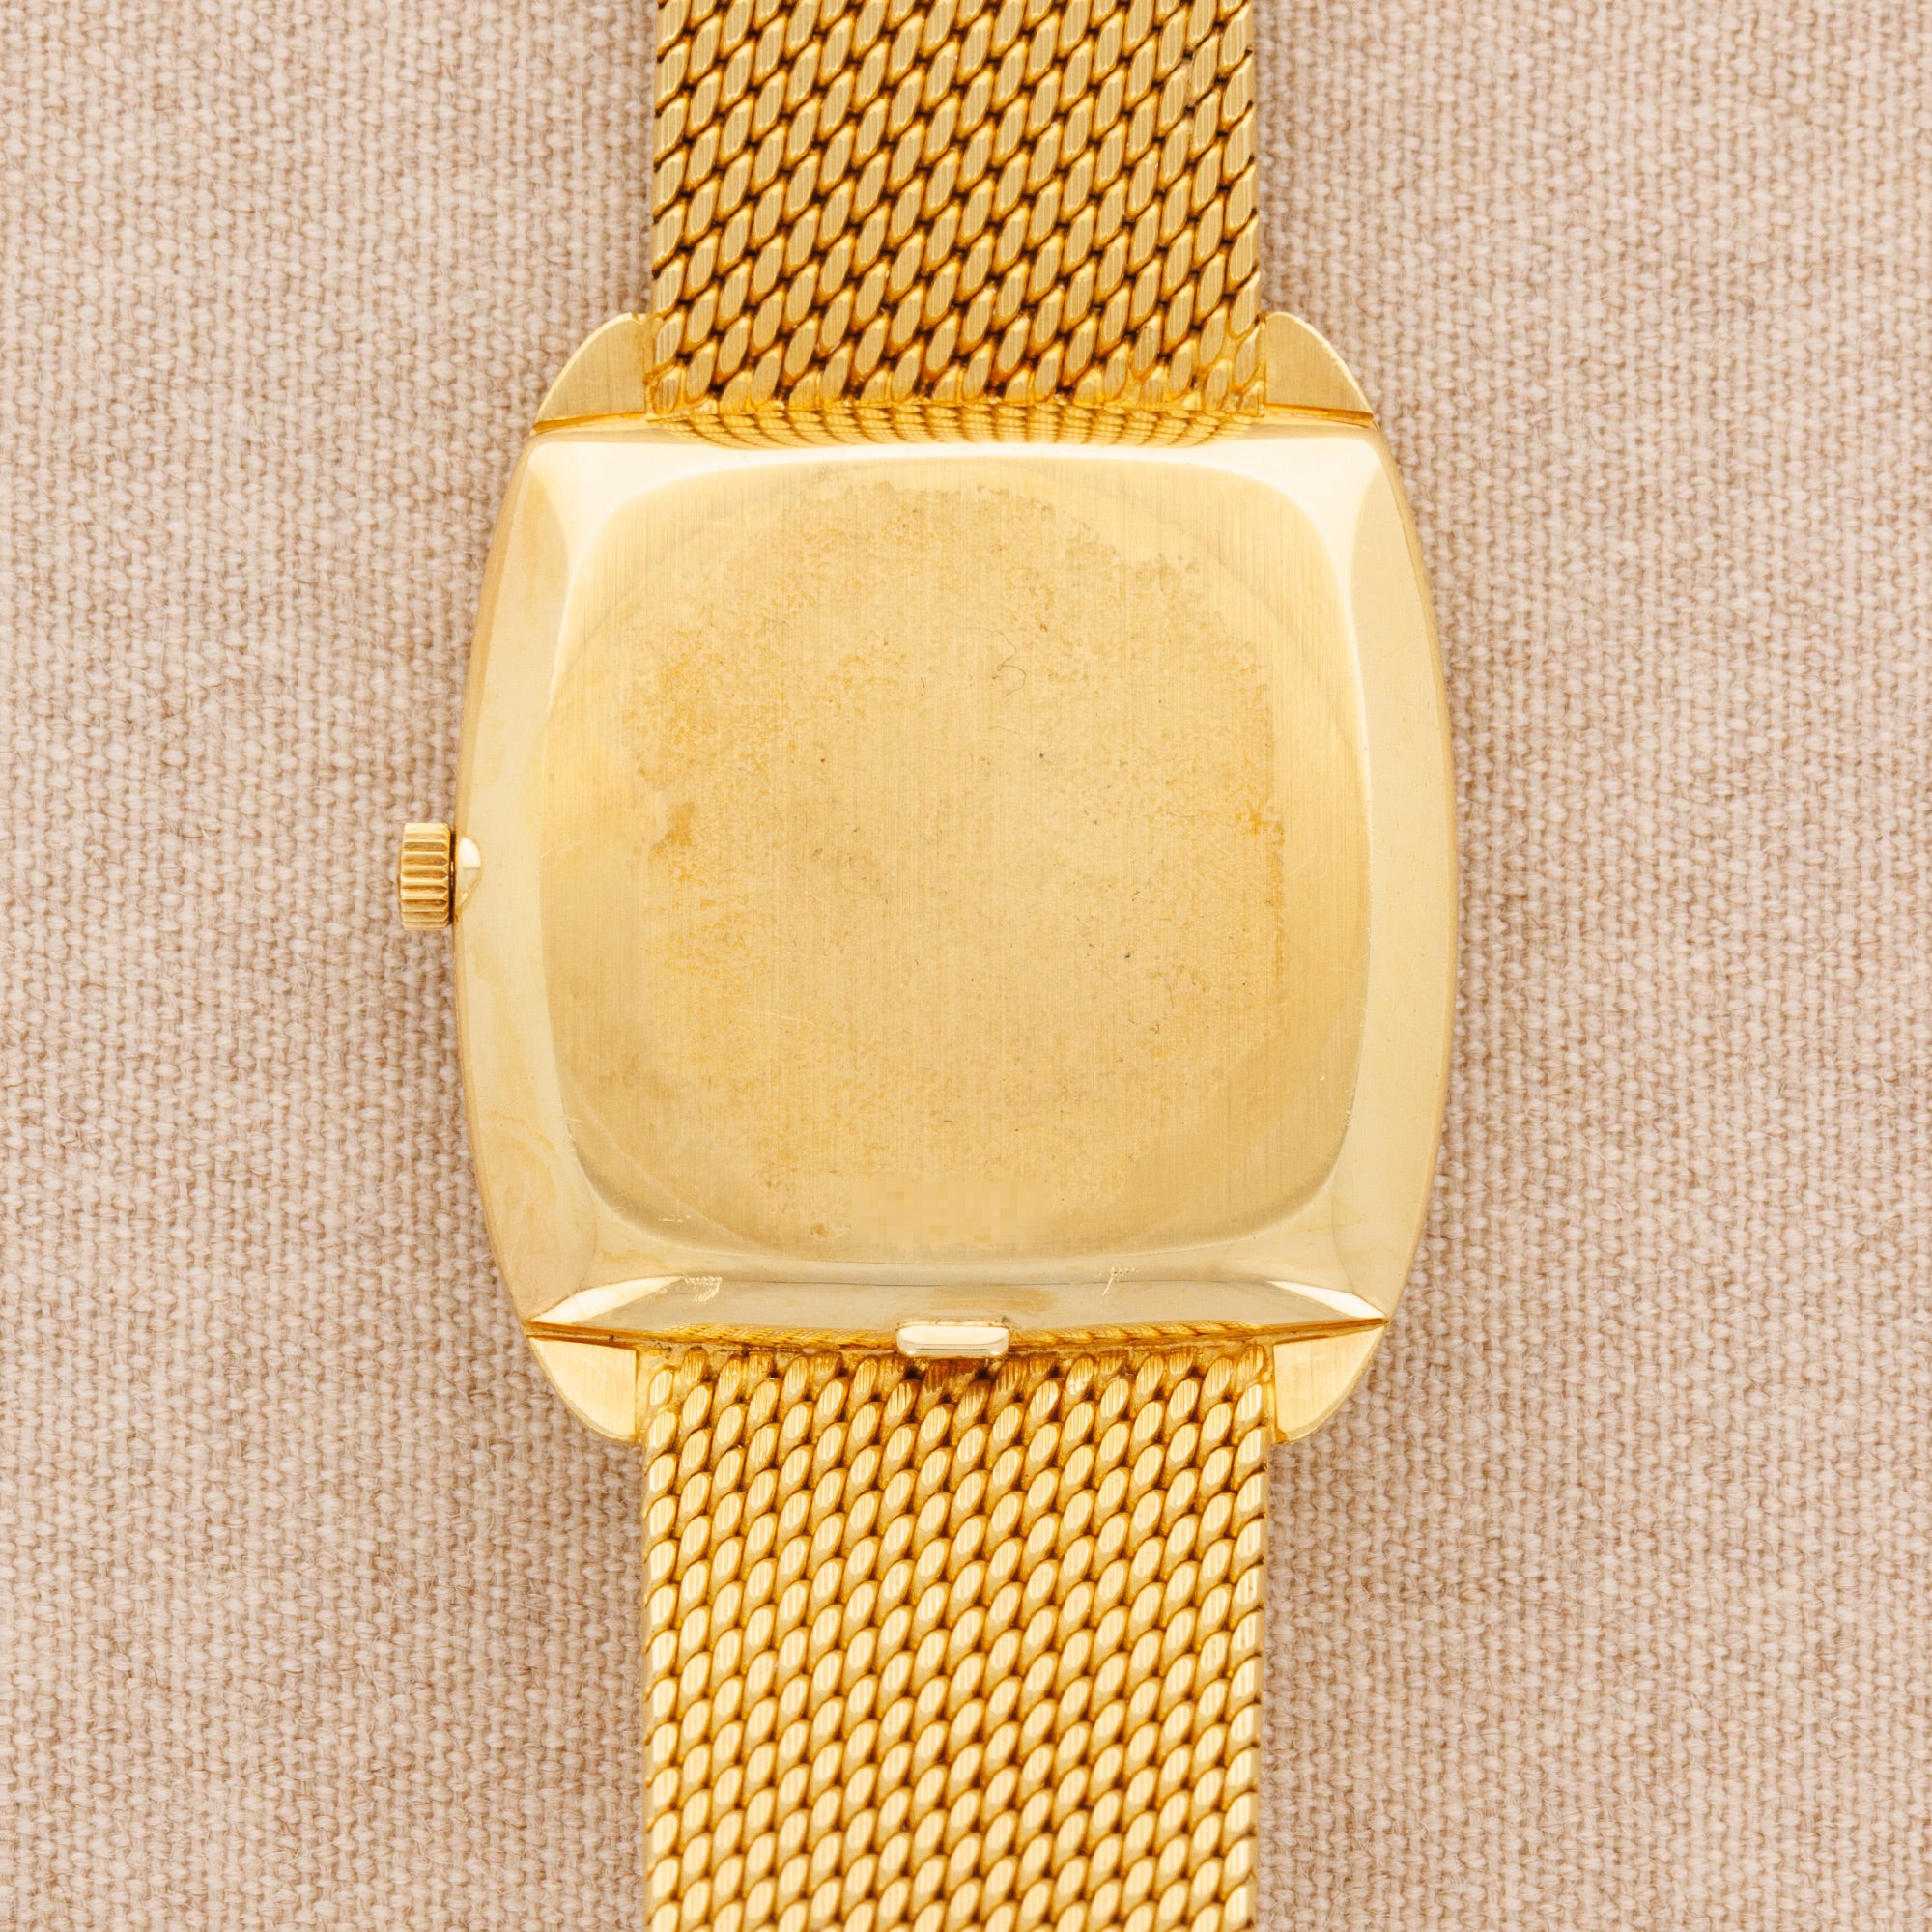 Vacheron Constantin - Vacheron Constantin Yellow Gold Bracelet Watch Ref. 44003 with Factory Diamond and Onyx Dial - The Keystone Watches